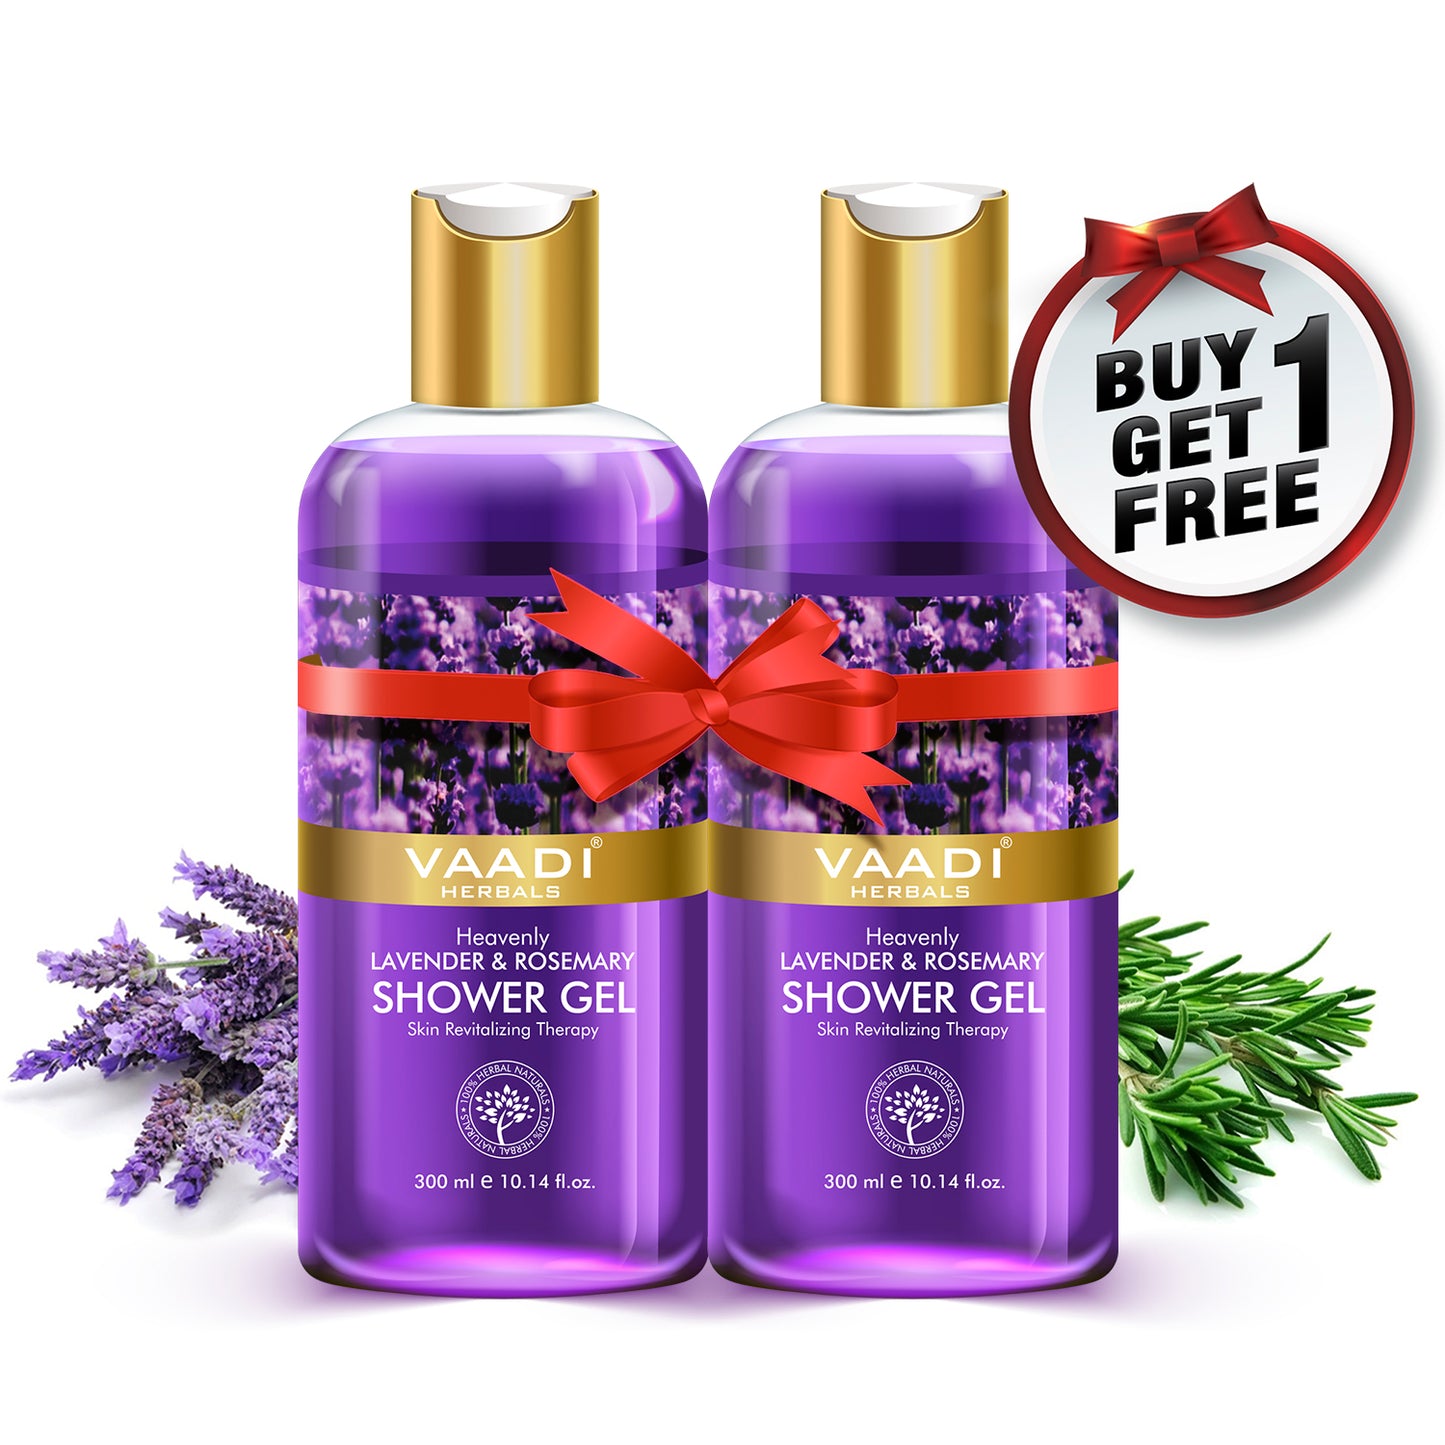 Organic Lavender & Rosemary Shower Gel - Skin Rejuvenating Therapy (2 x 300 ml / 10.2 fl oz) - <span>(Buy 1 Get 1 Free)</span>